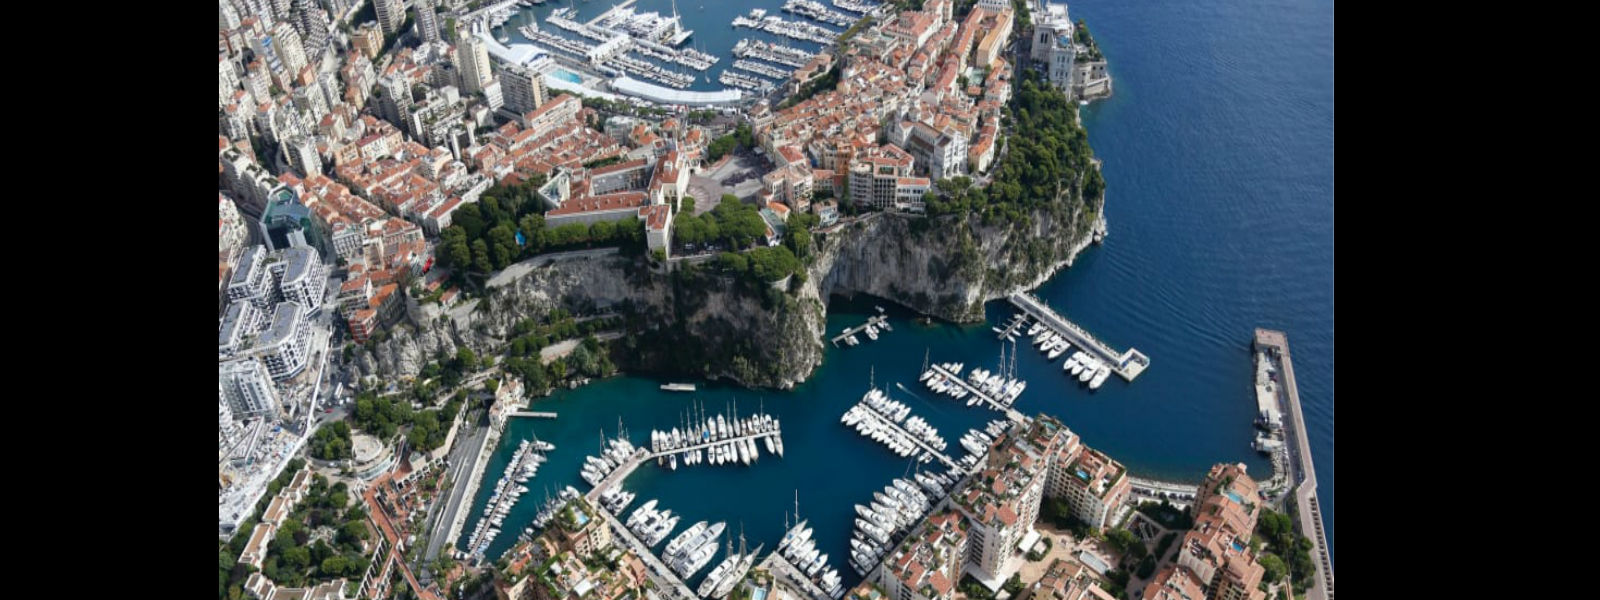 Monaco extends natural coastline adding land